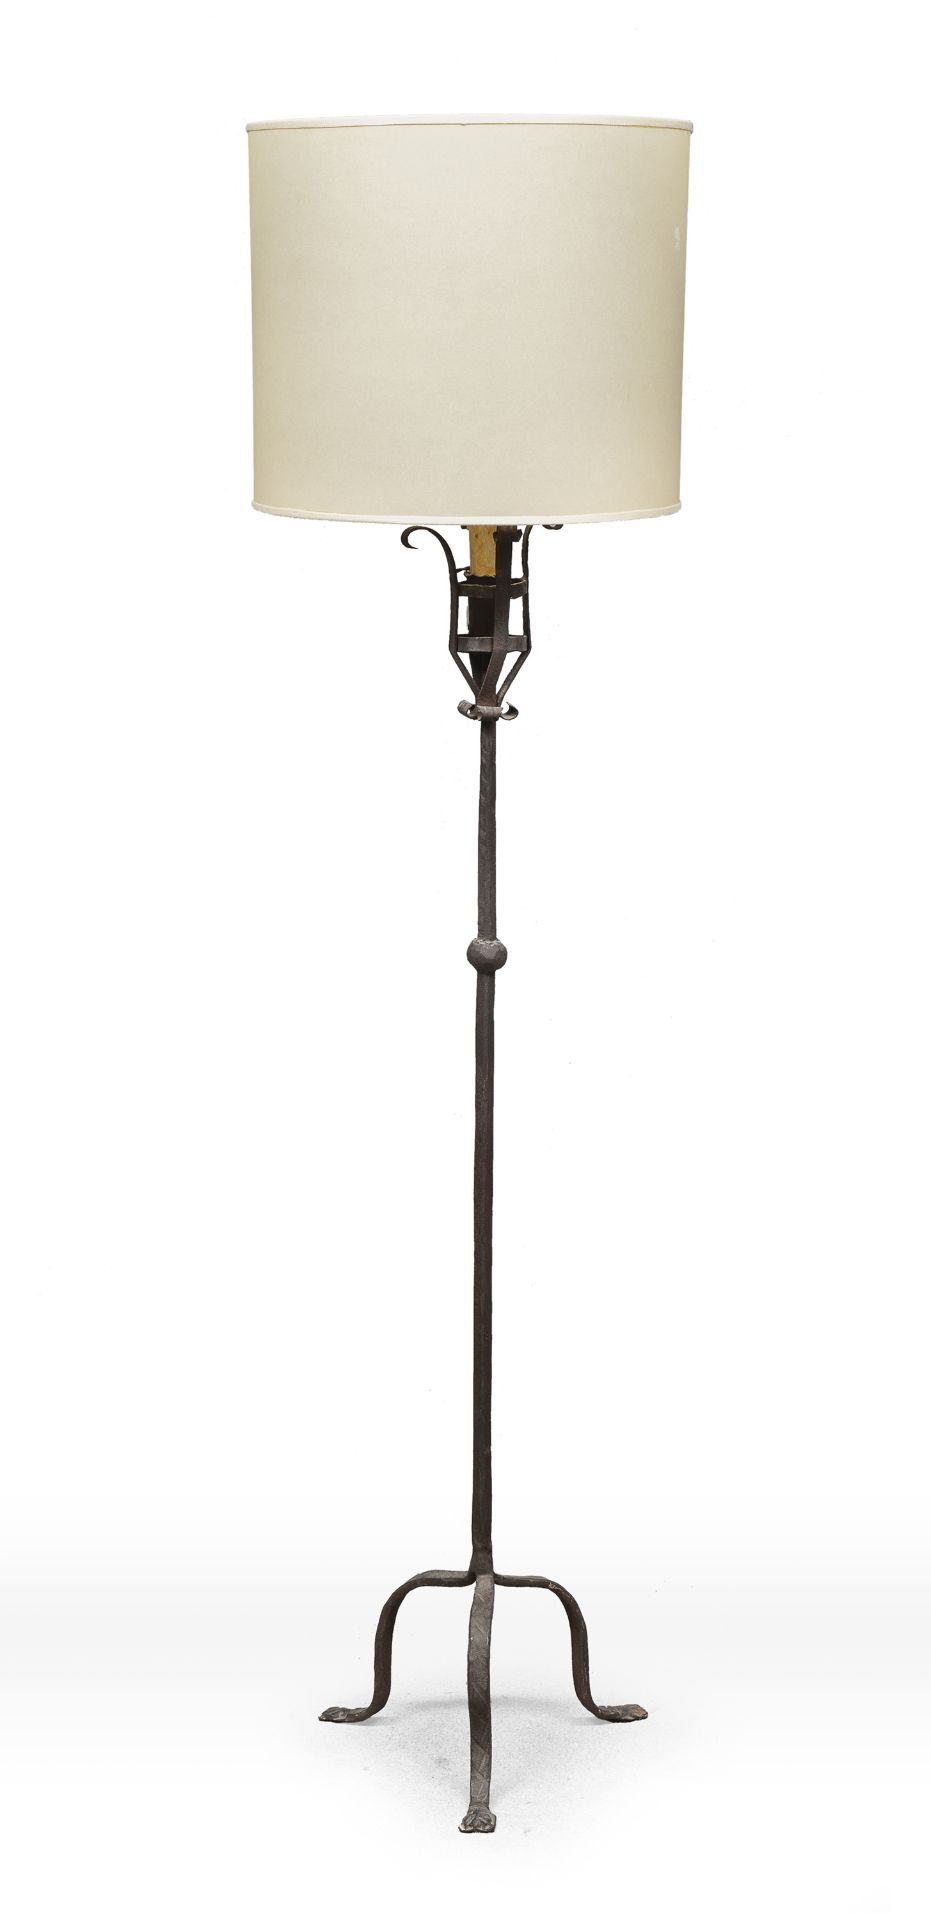 WROUGHT IRON FLOOR LAMP 19TH CENTURY